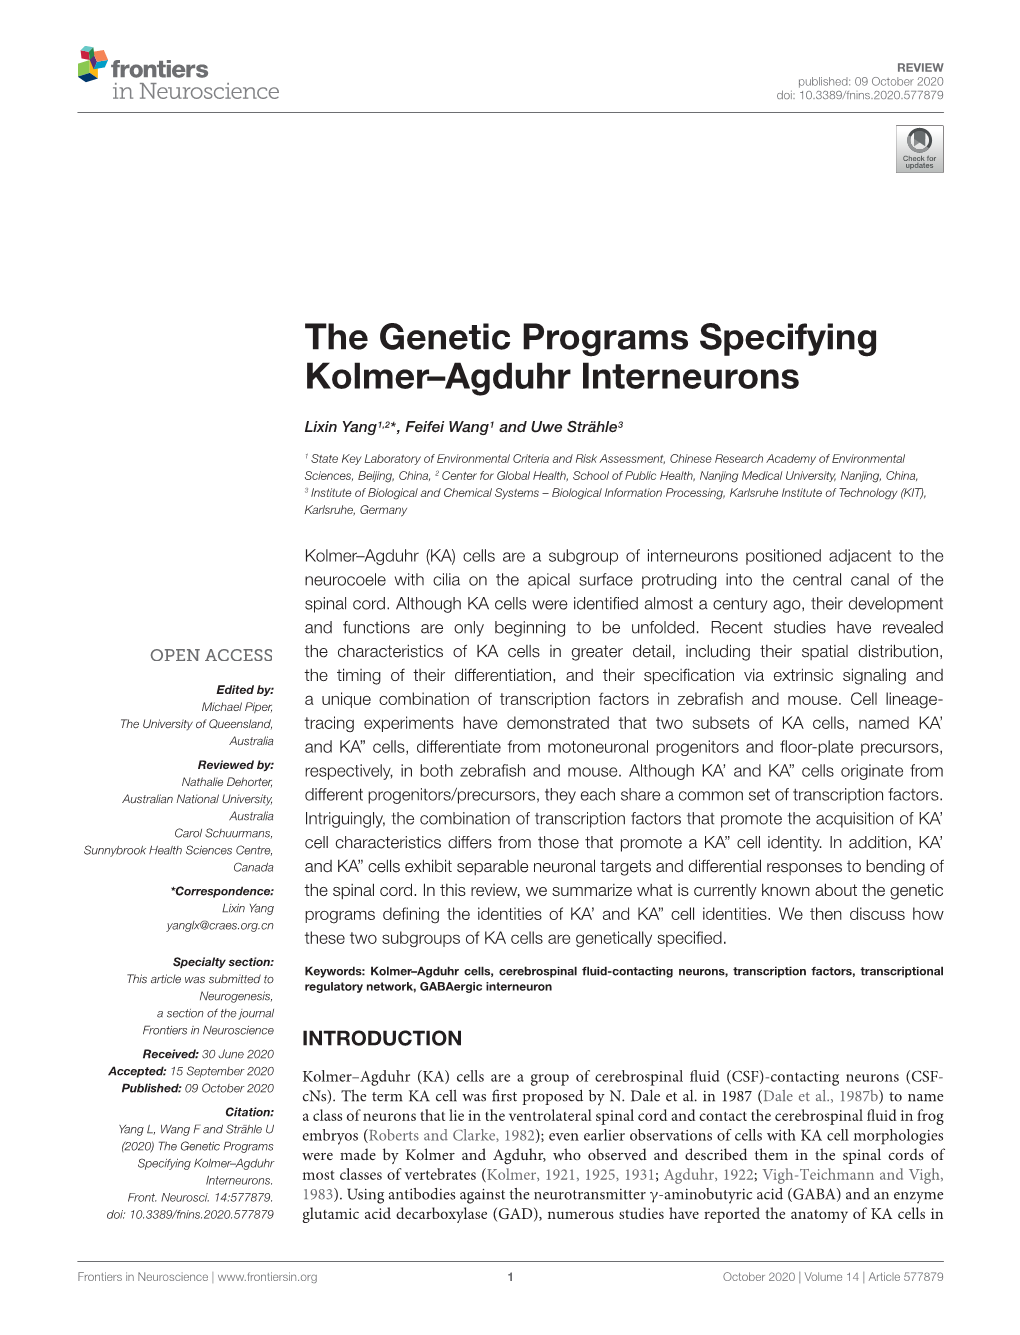 The Genetic Programs Specifying Kolmer–Agduhr Interneurons